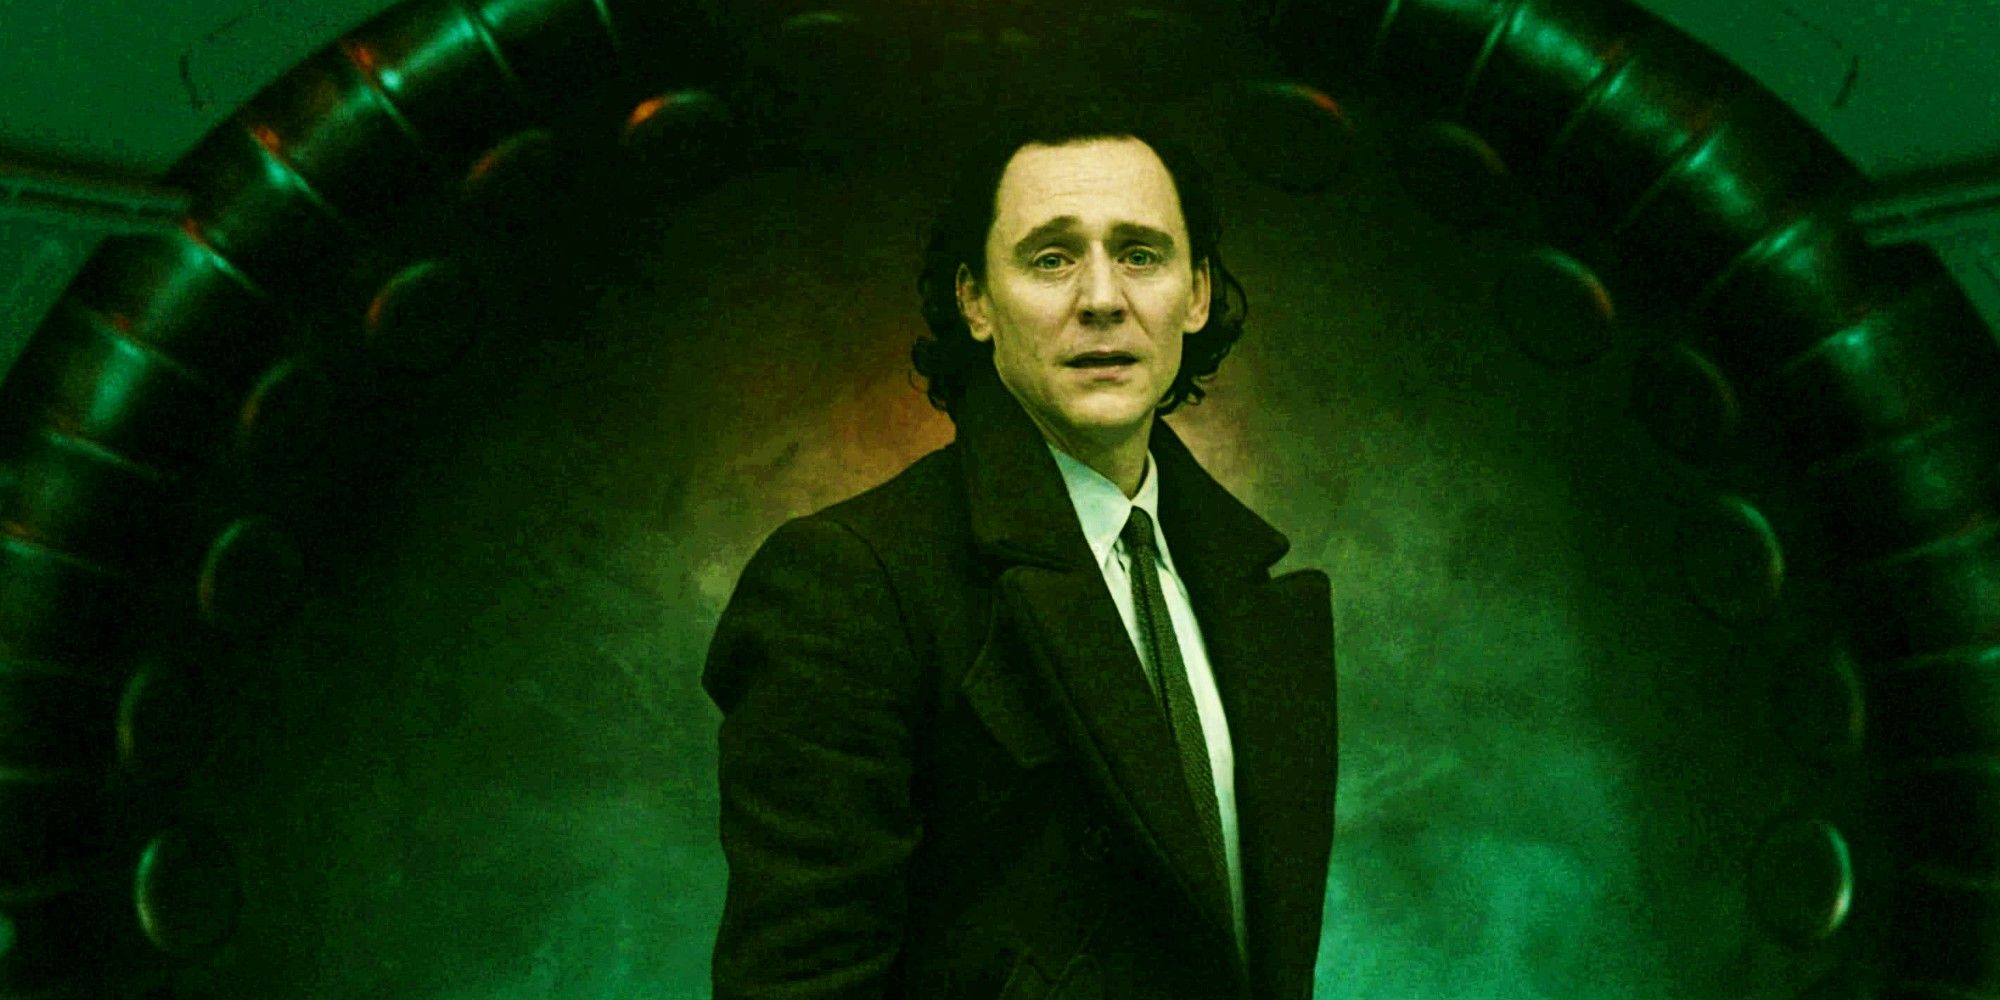 Tom Hiddleston As Loki Looking Heartbroken Back At His Friends Before Entering The Time Loom In Loki Season 2 Finale